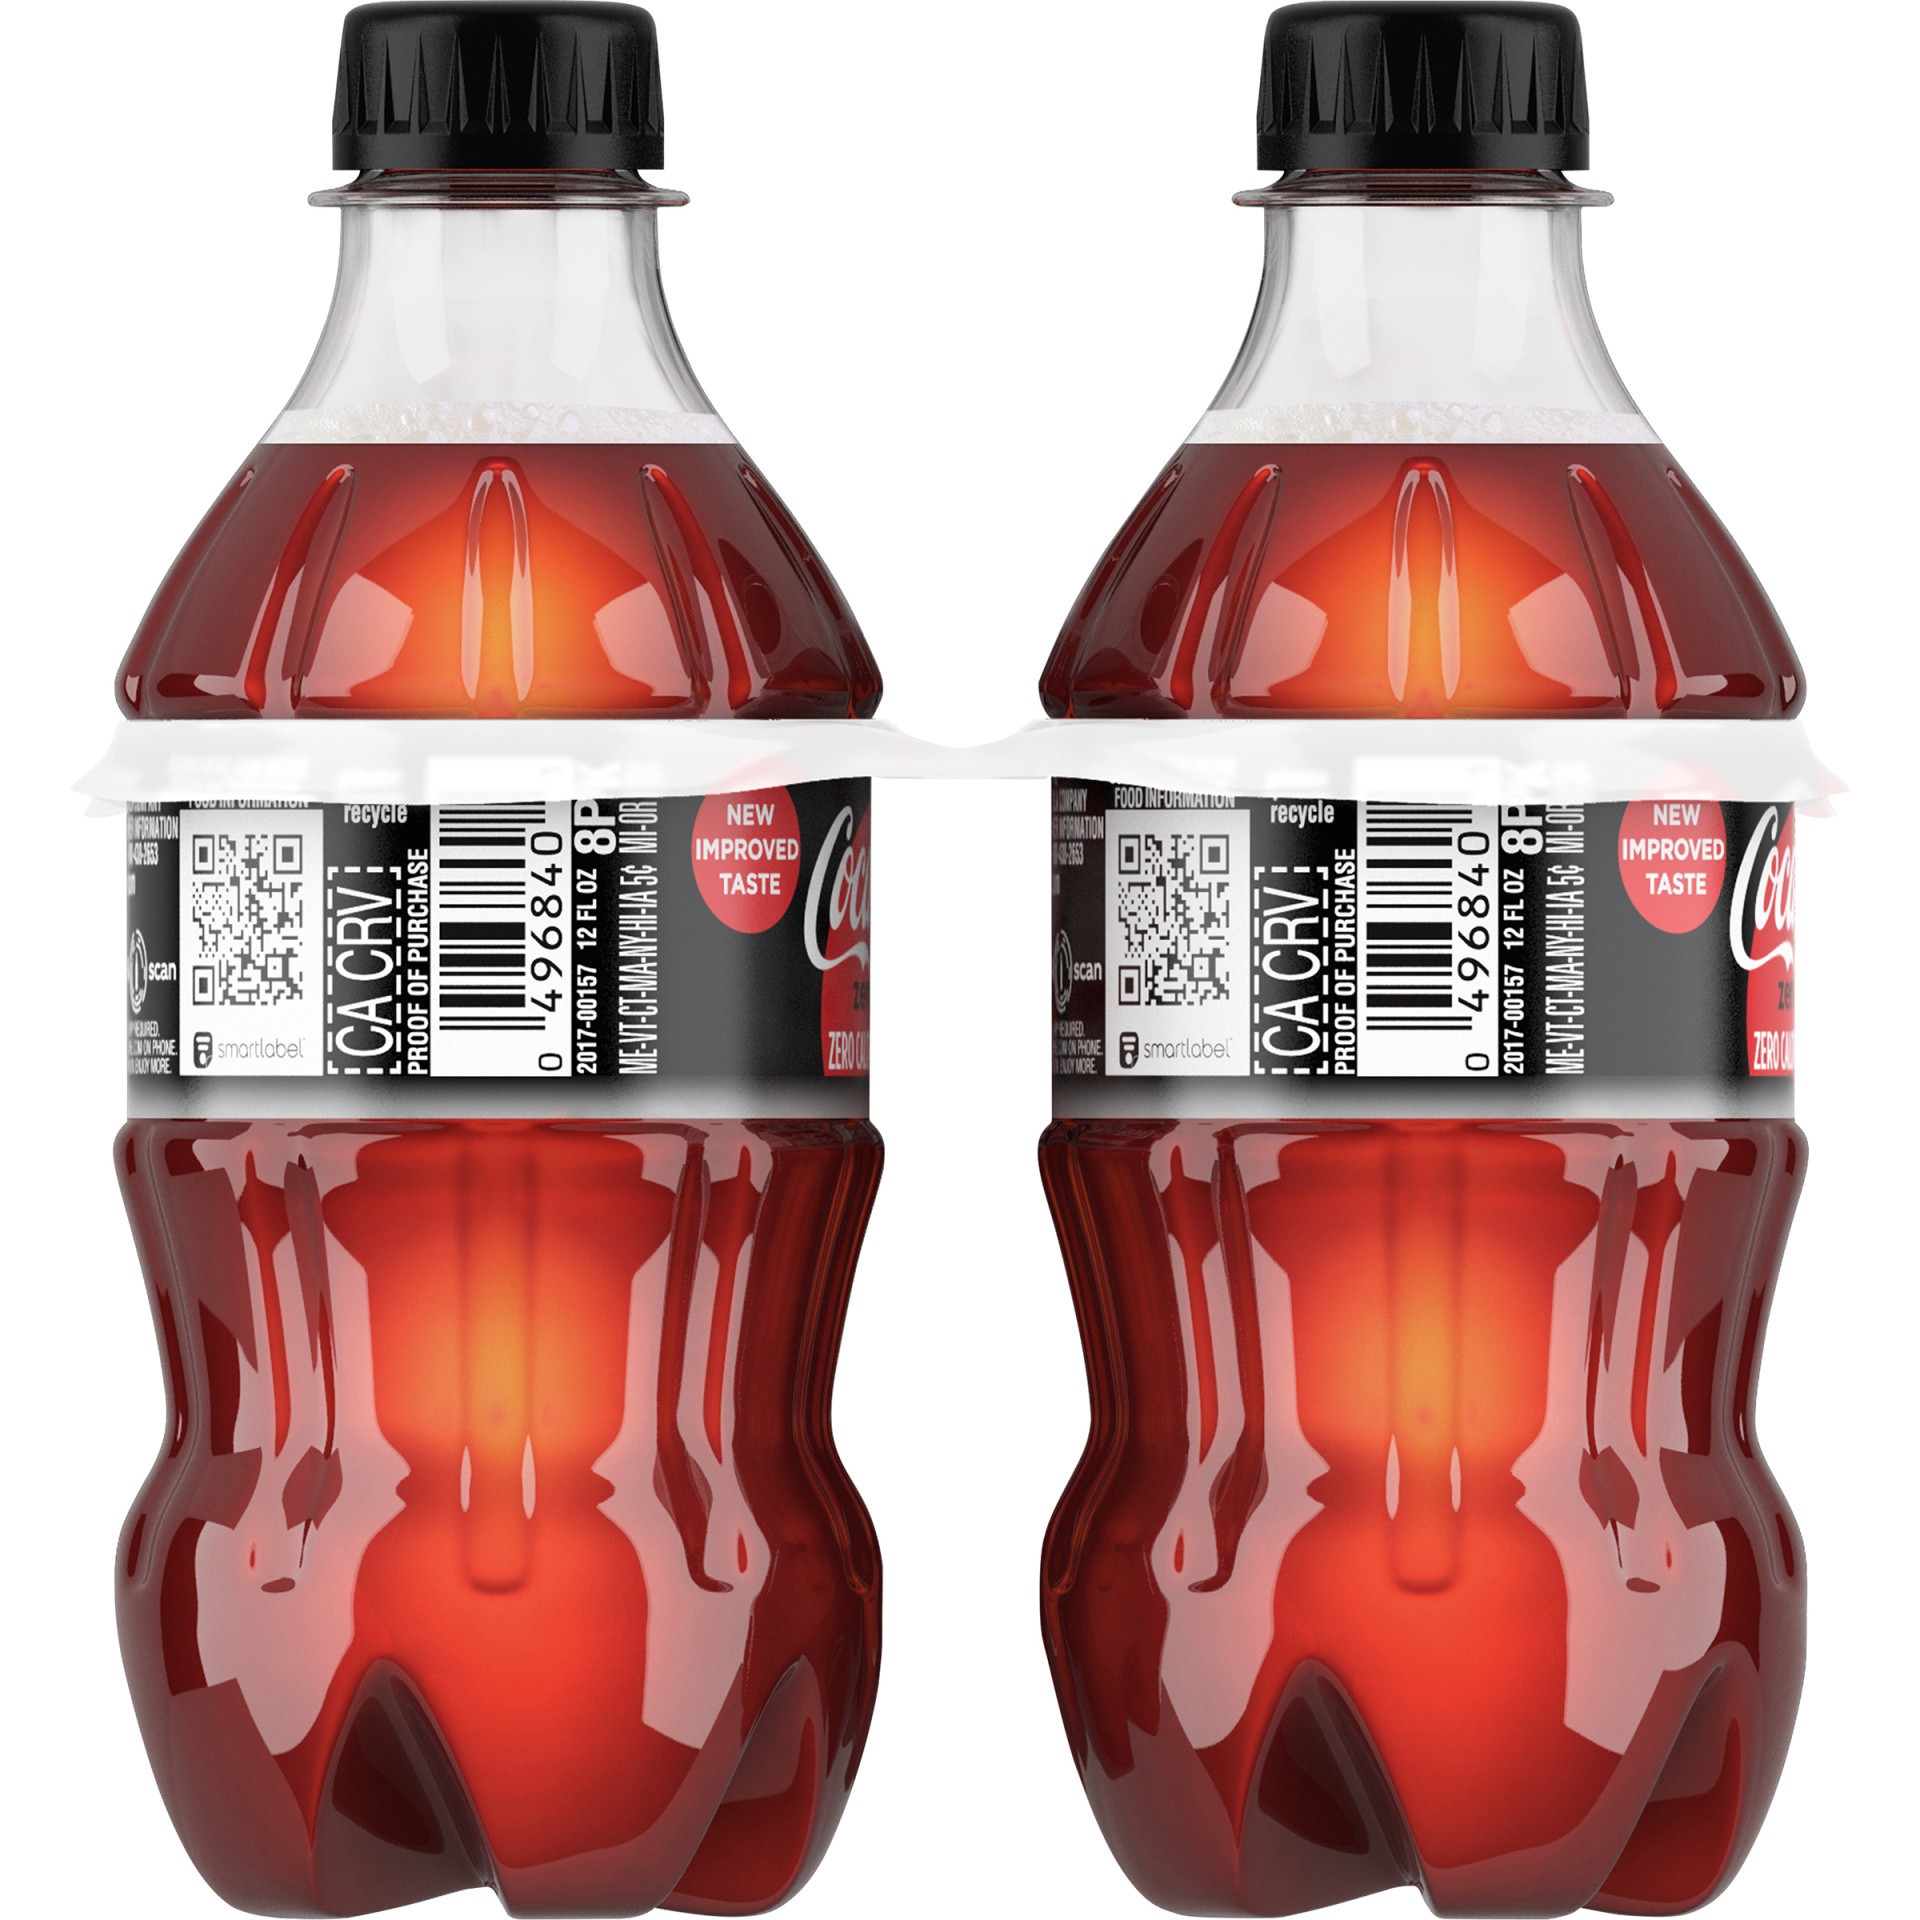 Coke Zero Plastic Bottle (20 oz.)